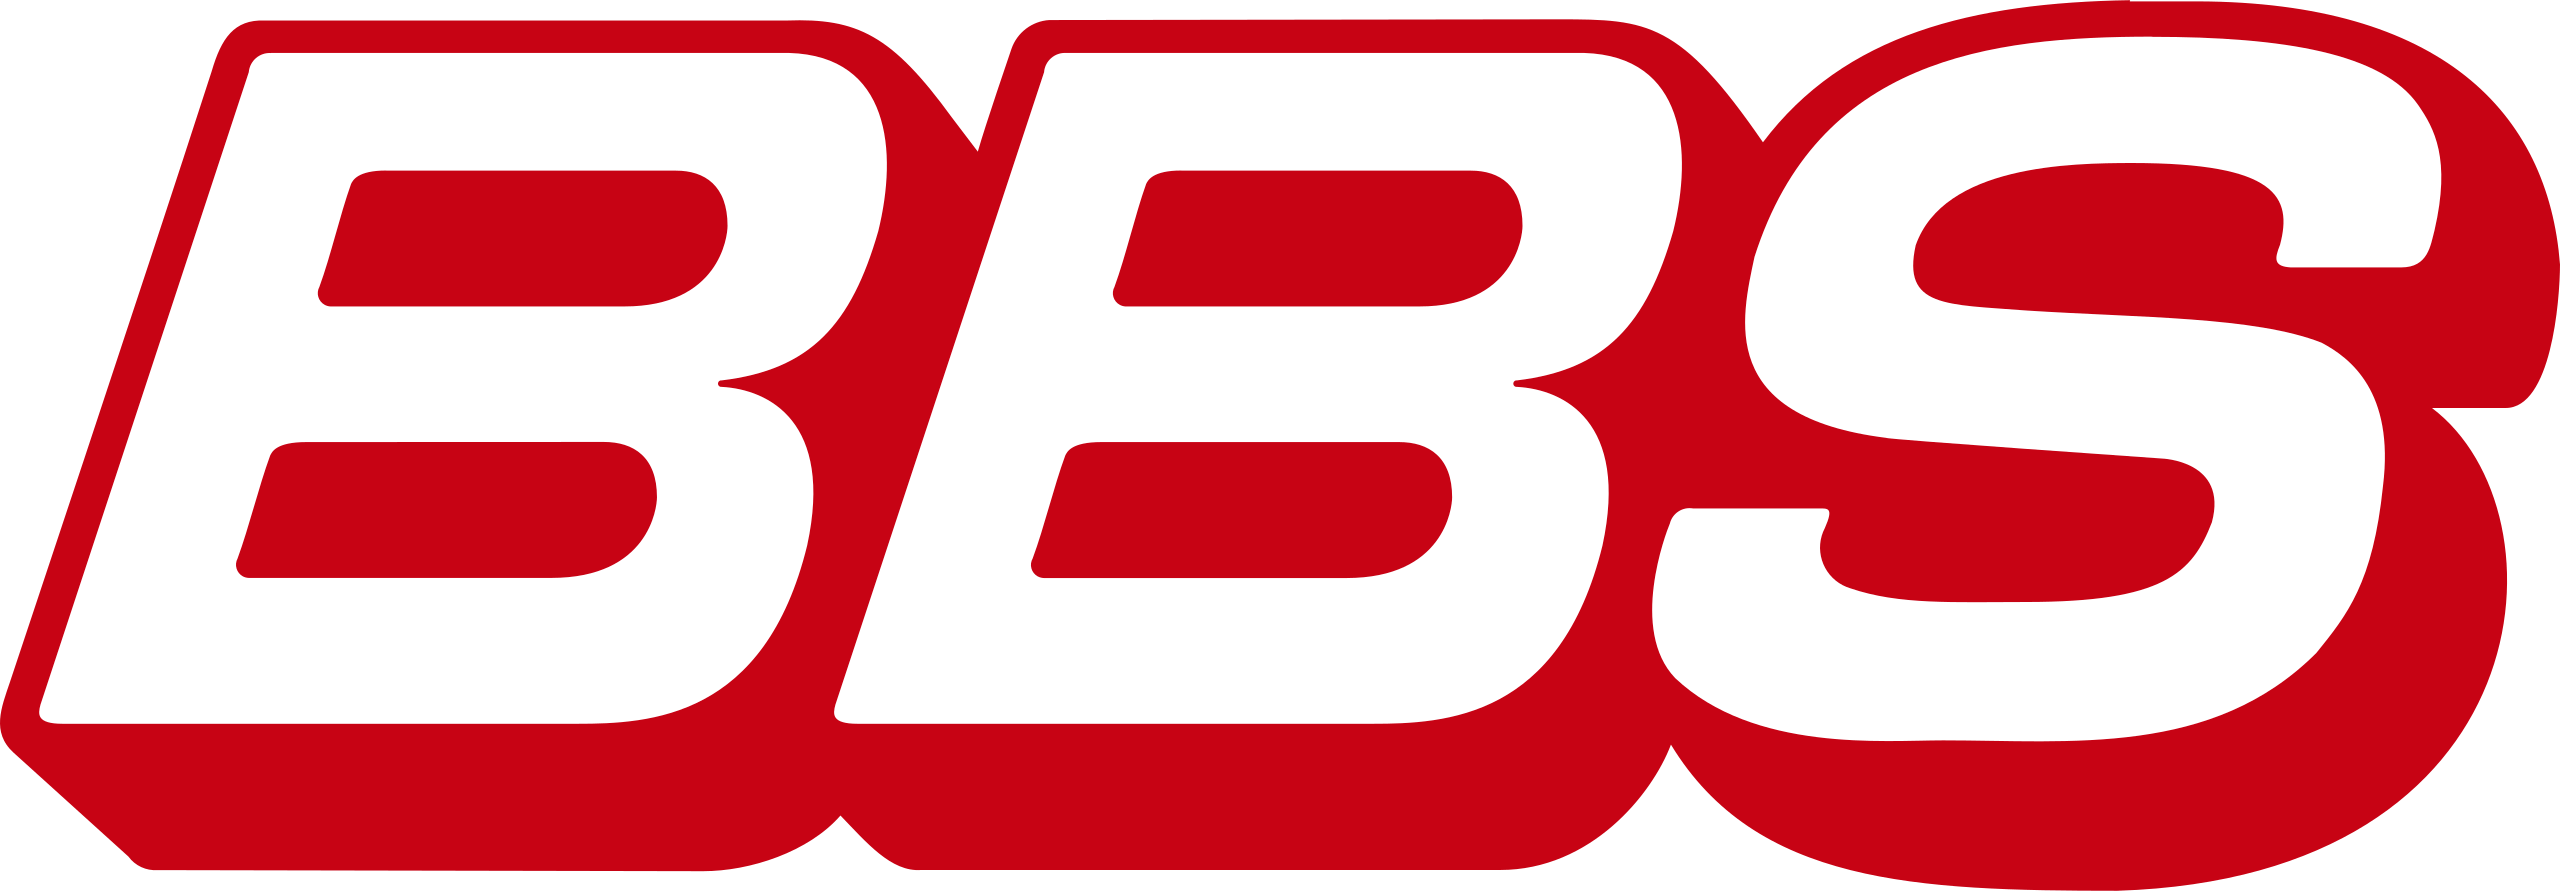 BBS logo.svg min